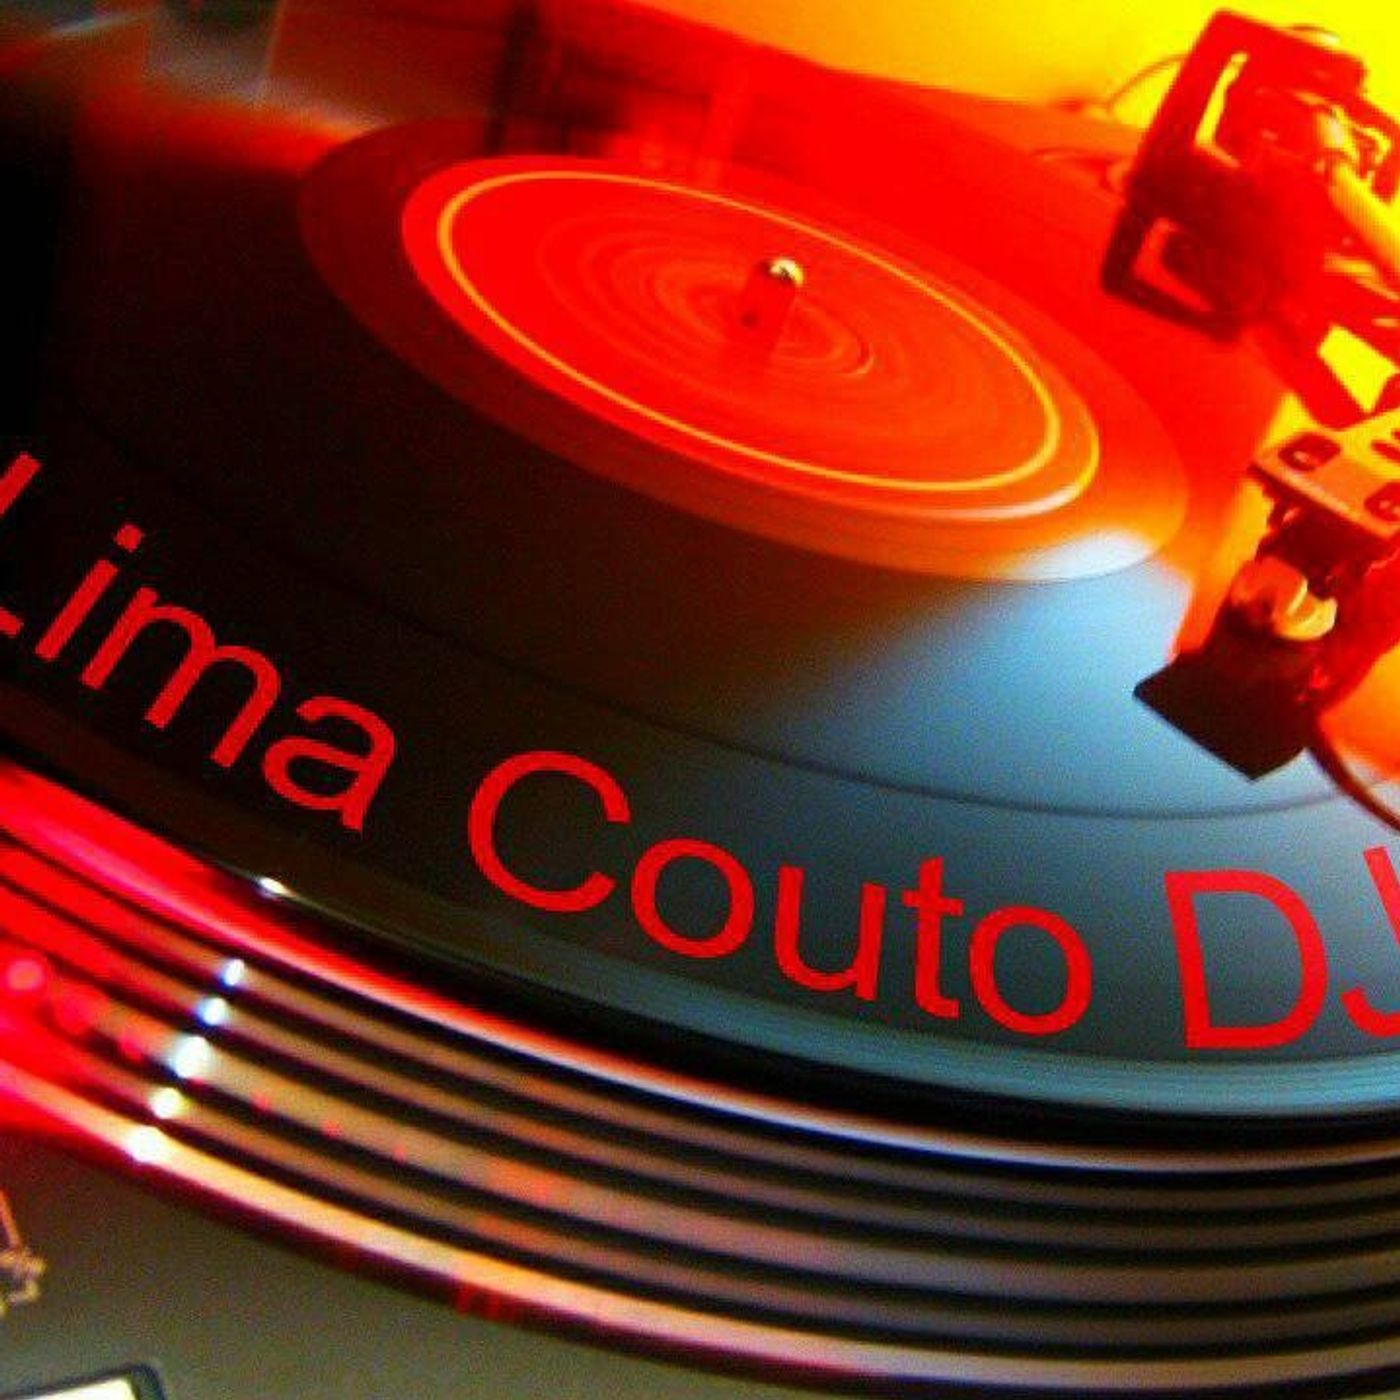 Lima Couto's tracks